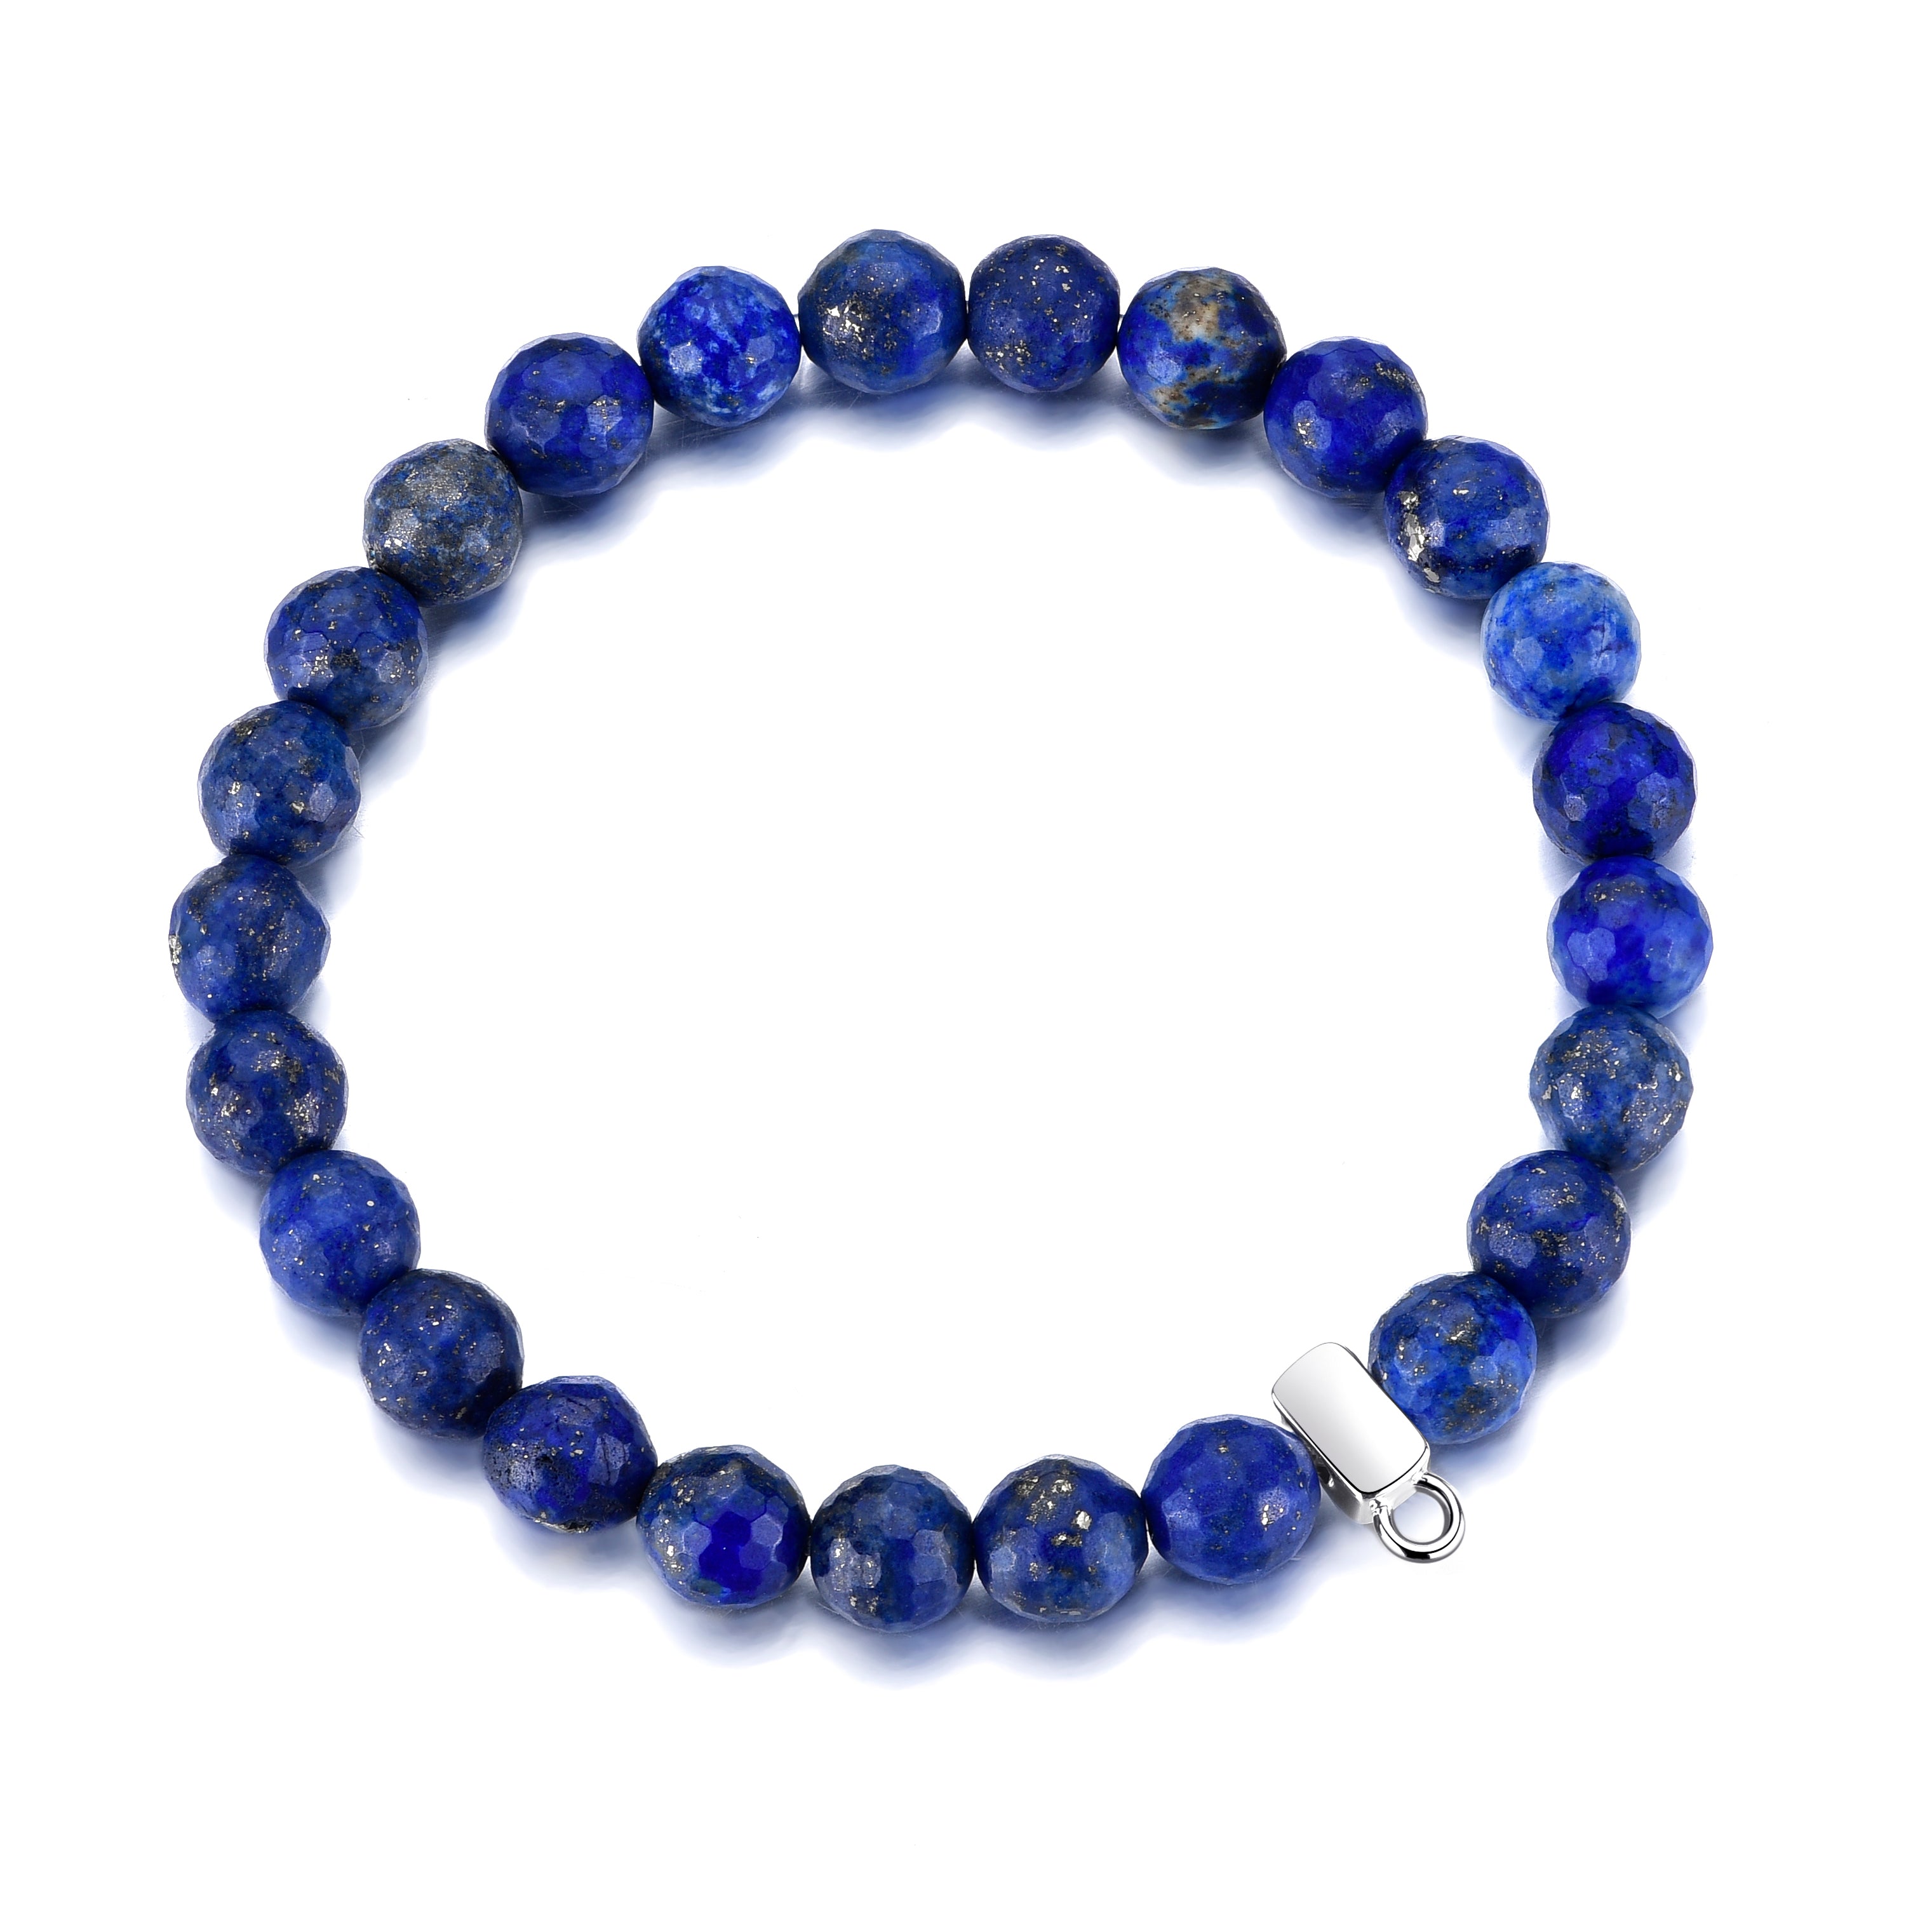 Faceted Lapis Lazuli Gemstone Charm Stretch Bracelet by Philip Jones Jewellery